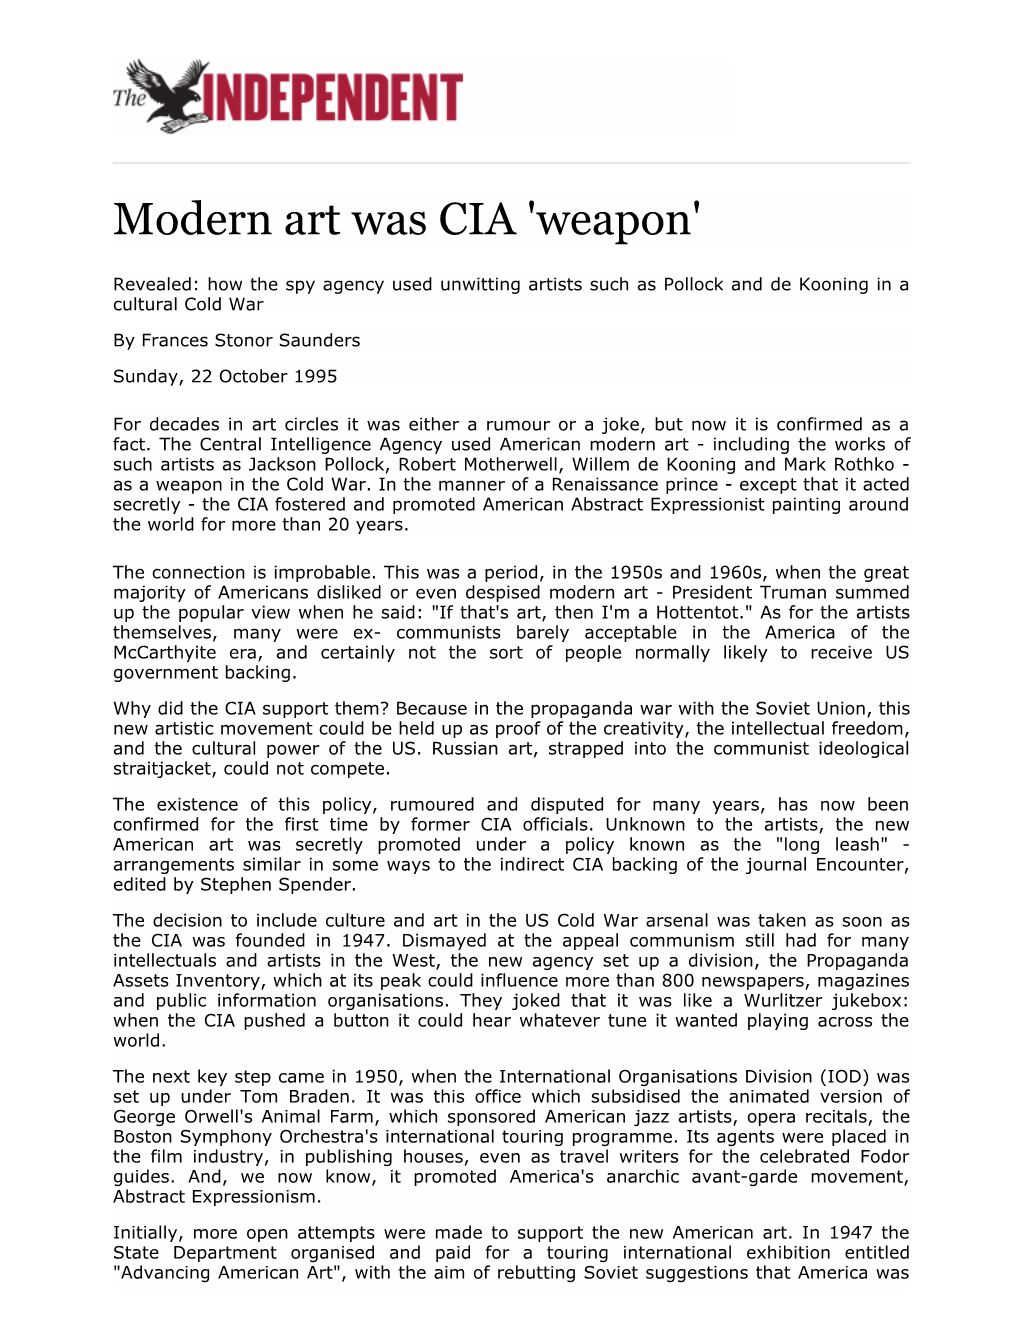 Modern Art Was CIA 'Weapon'